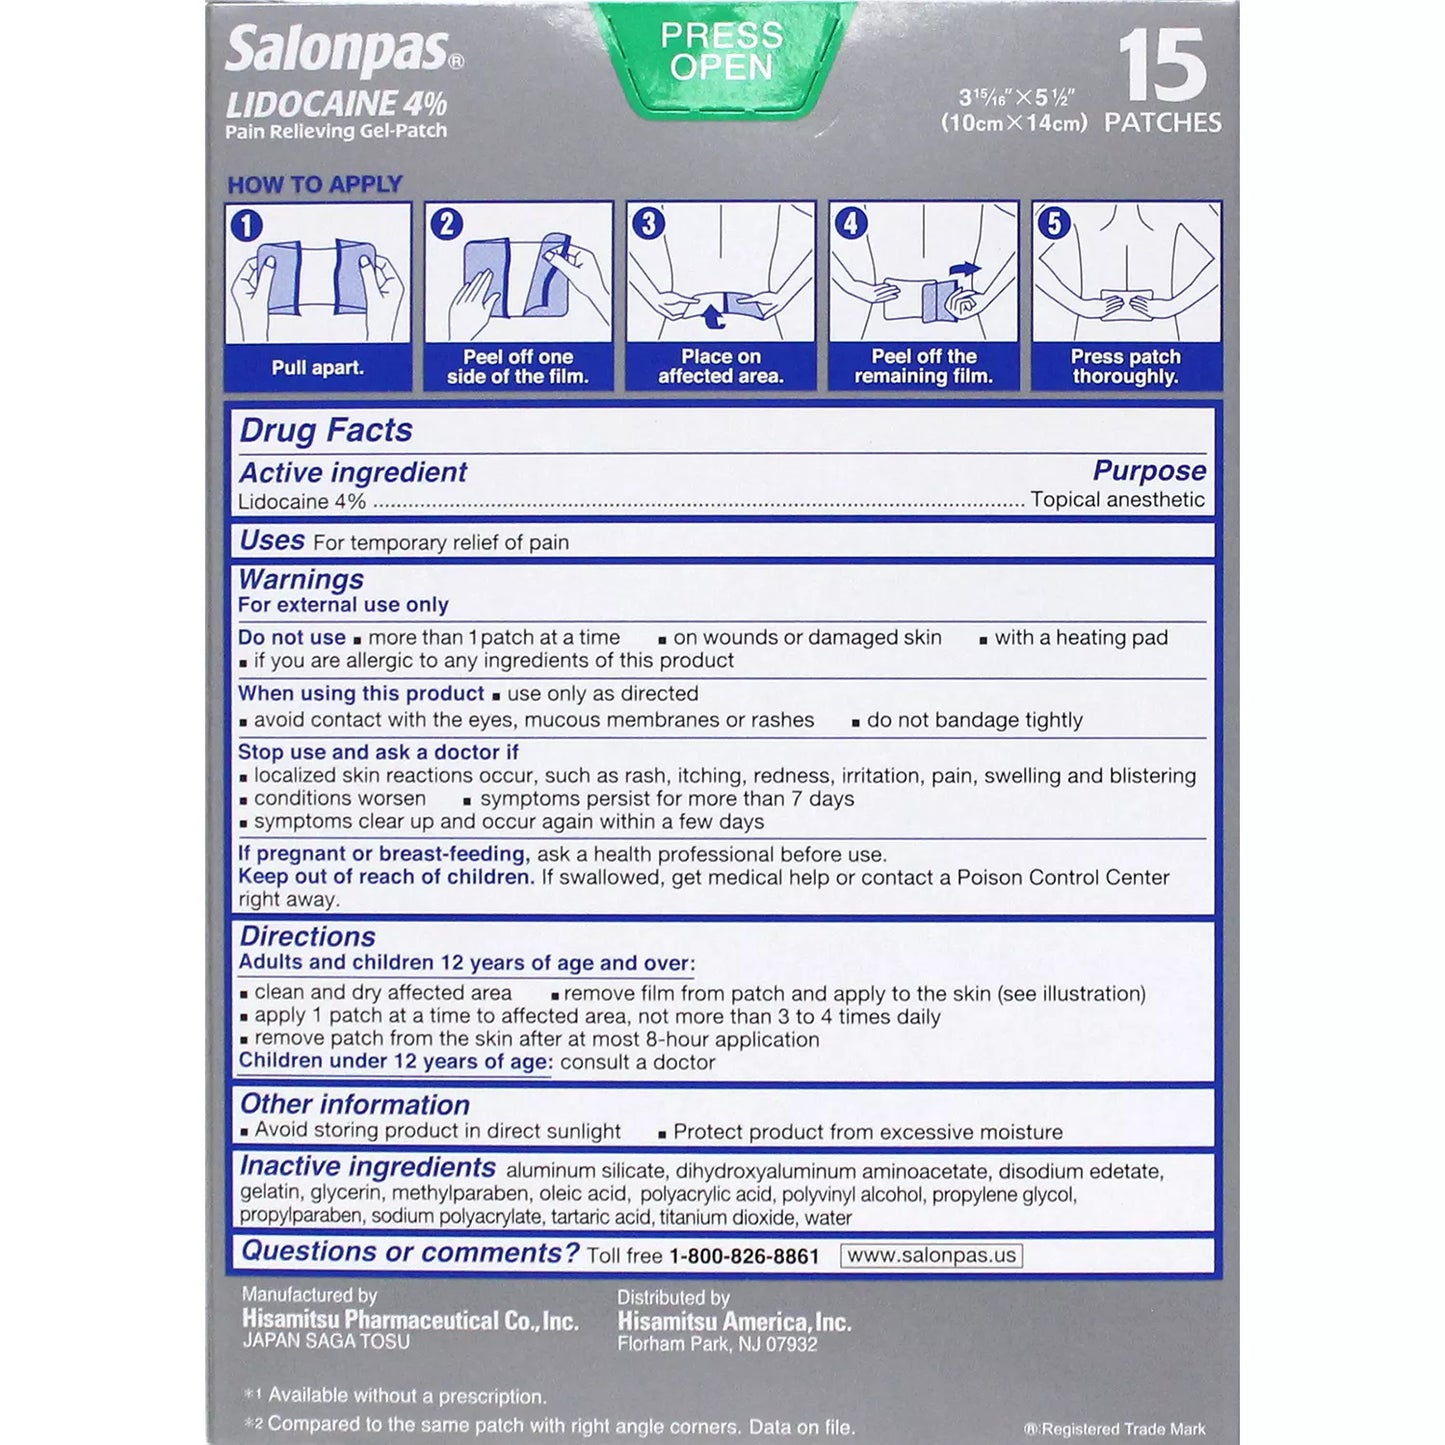 Salonpas Lidocaine Gel-Patch (15 ct.)